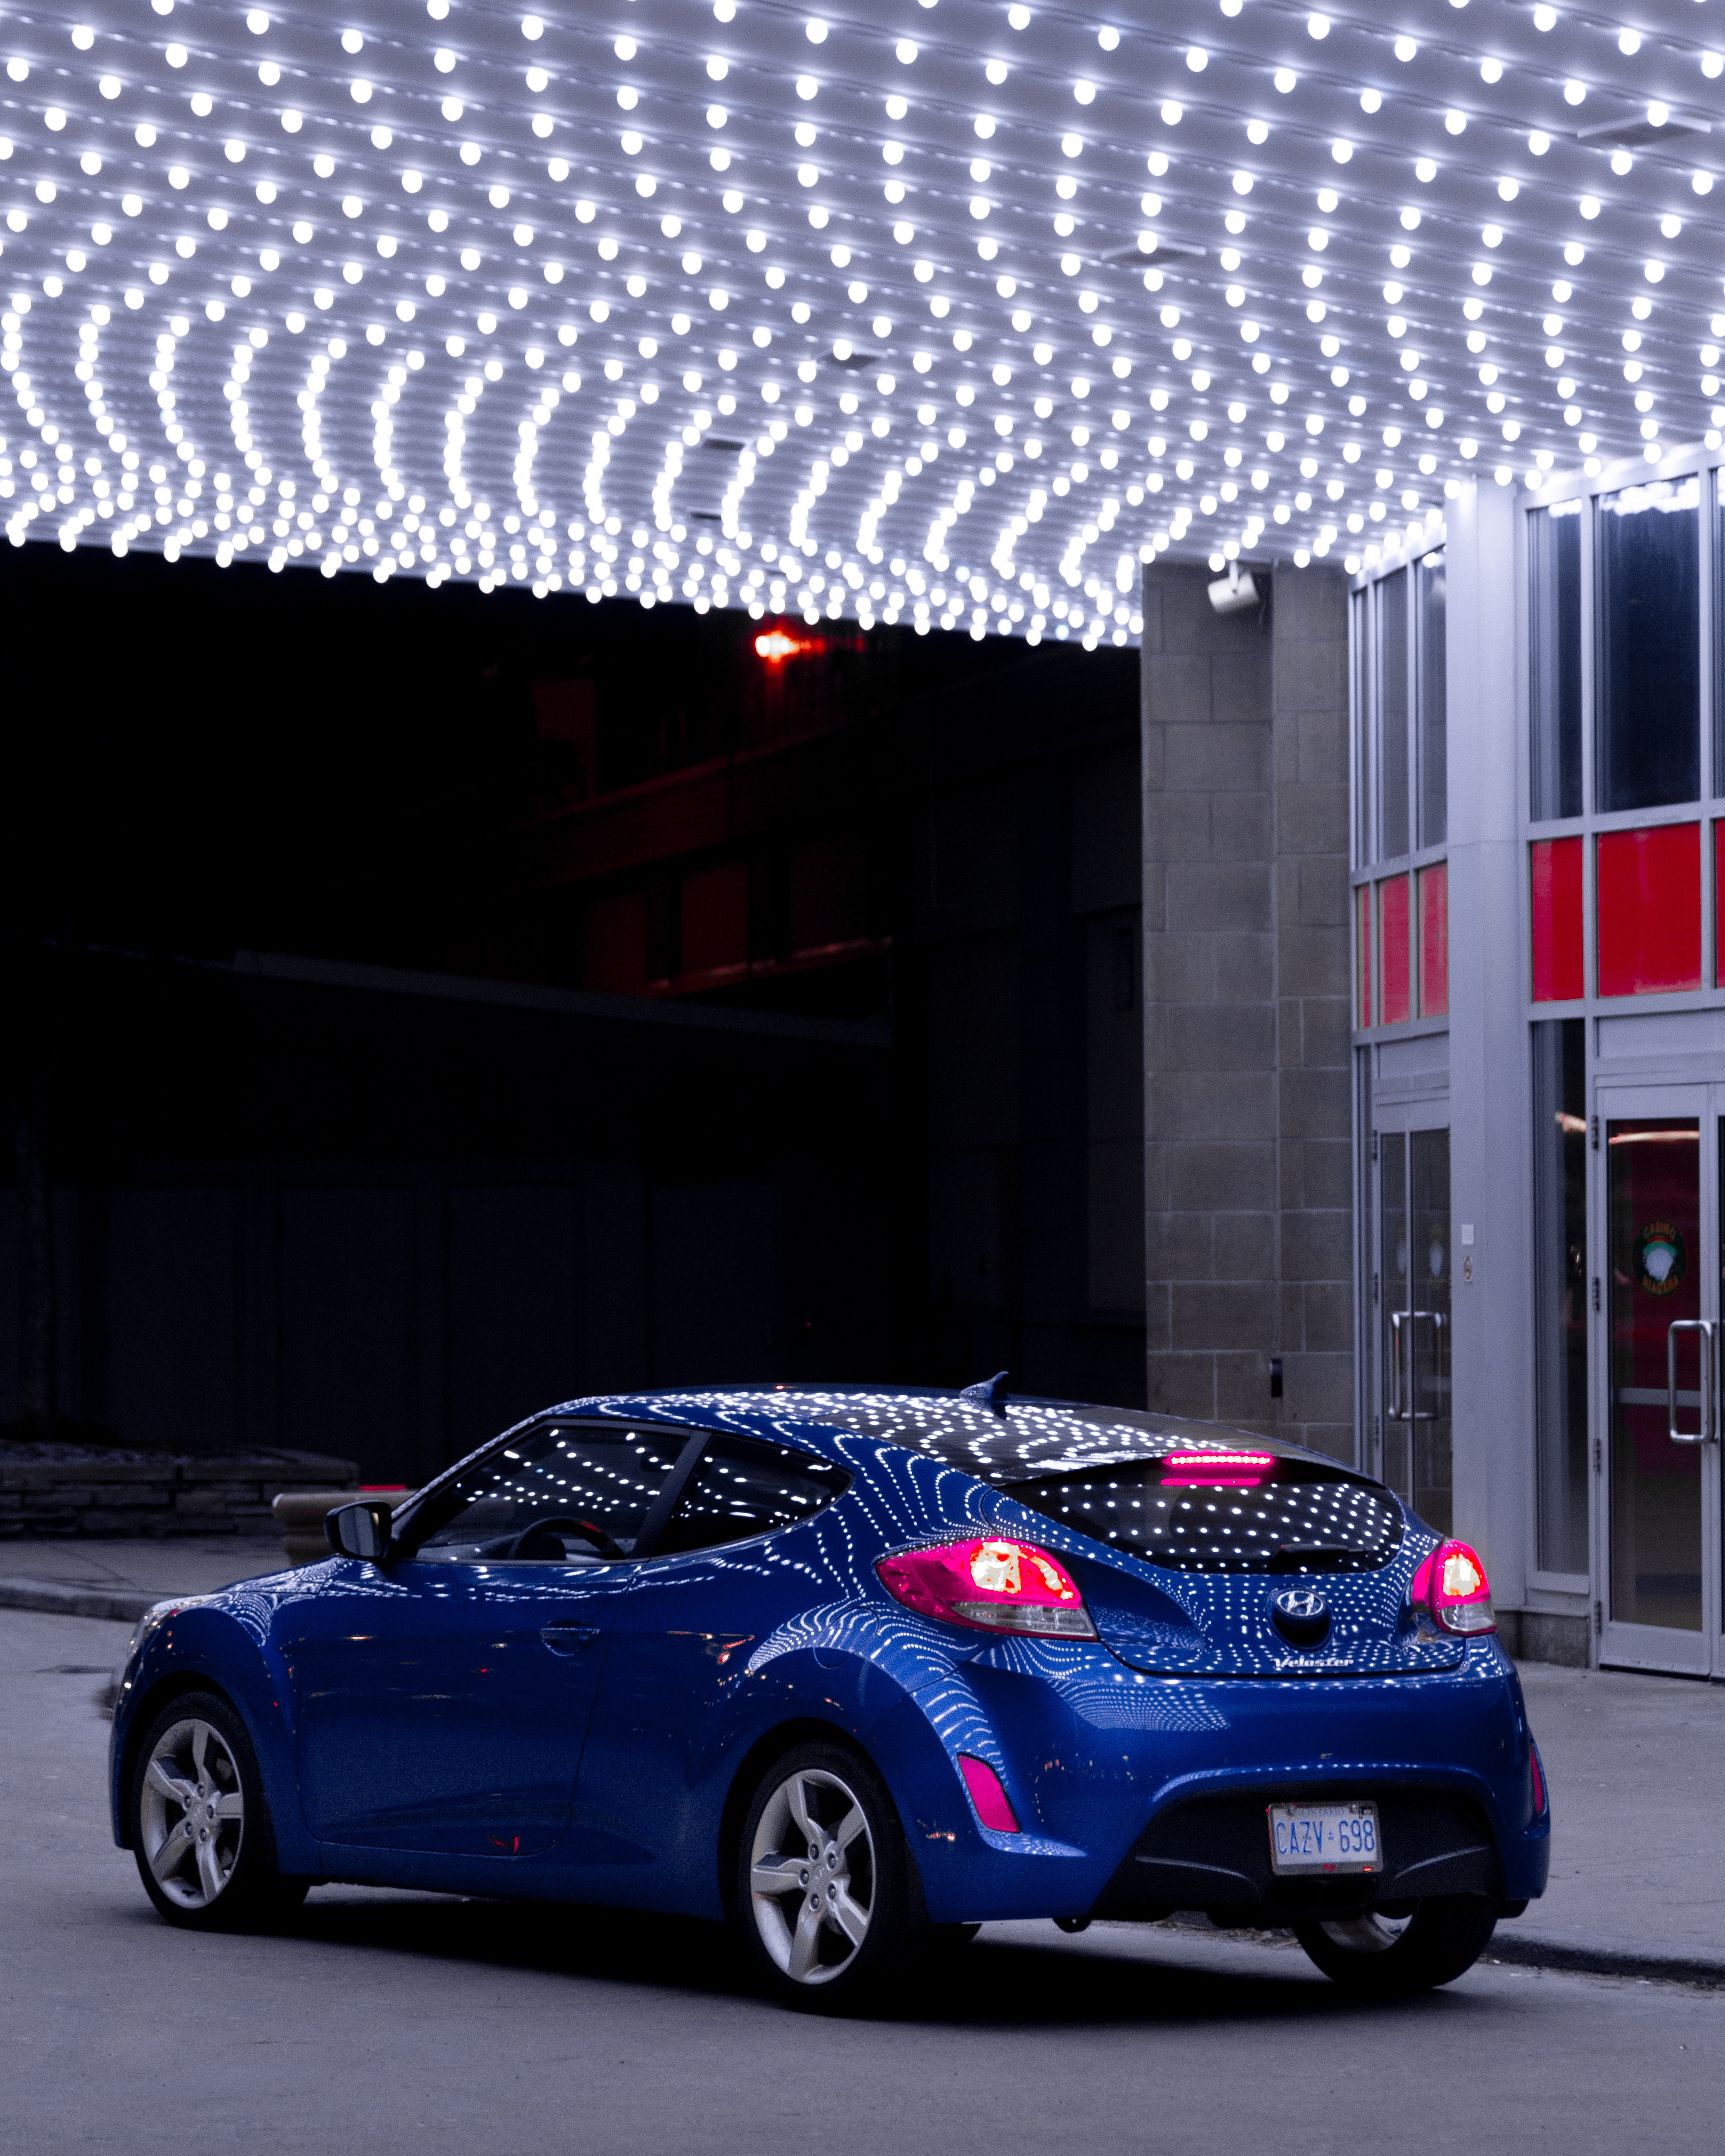 vertical wallpaper shine, hyundai, cars, blue, light, side view, street